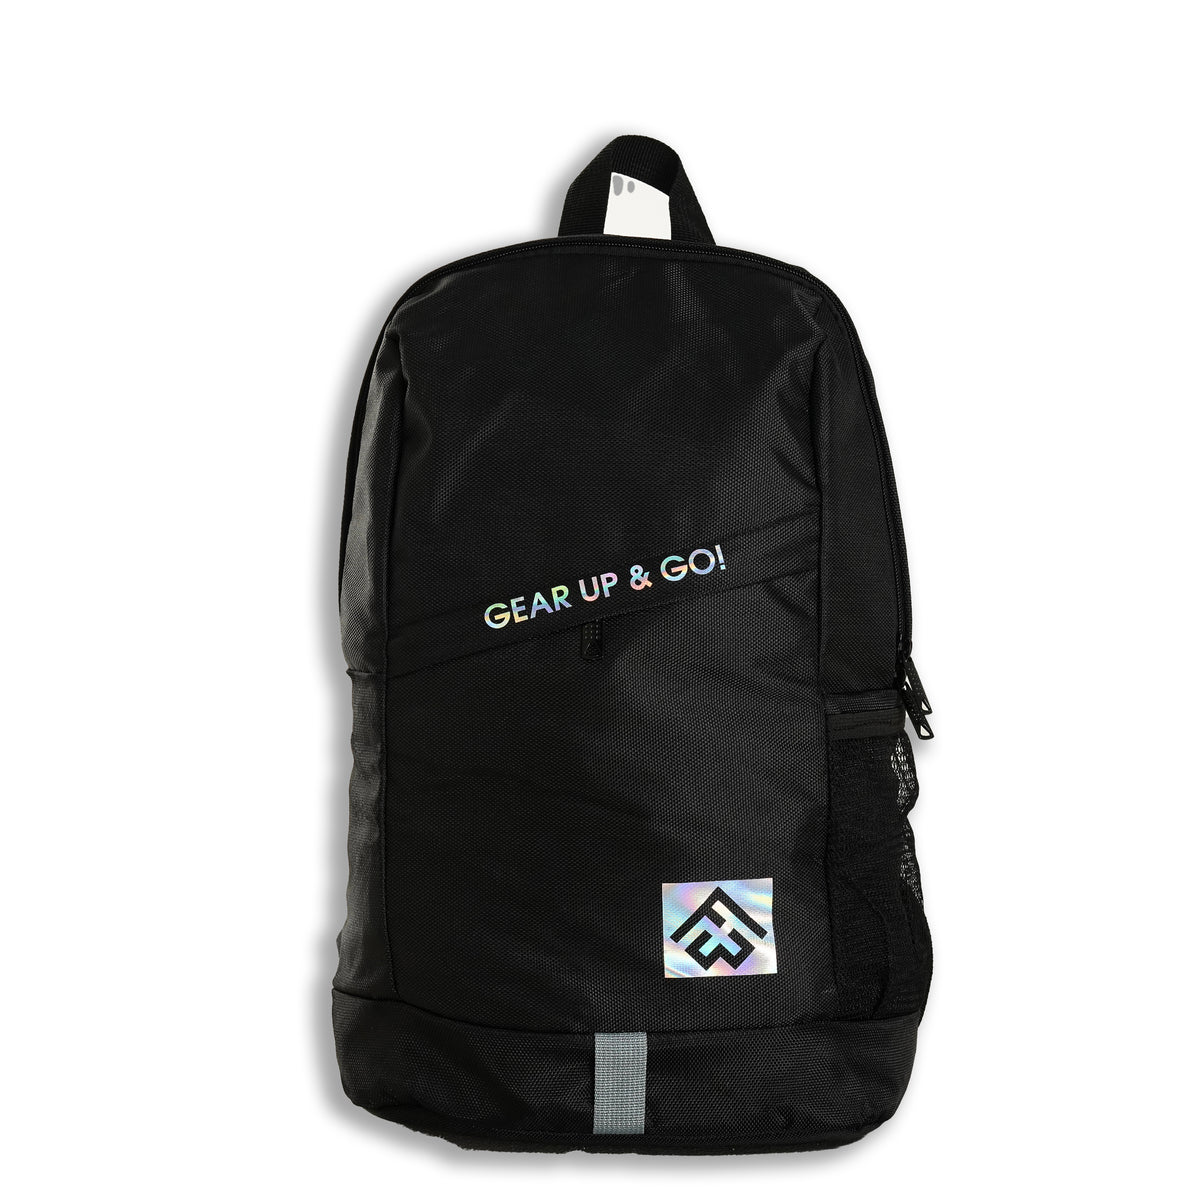 Fibr - Regal Backpack